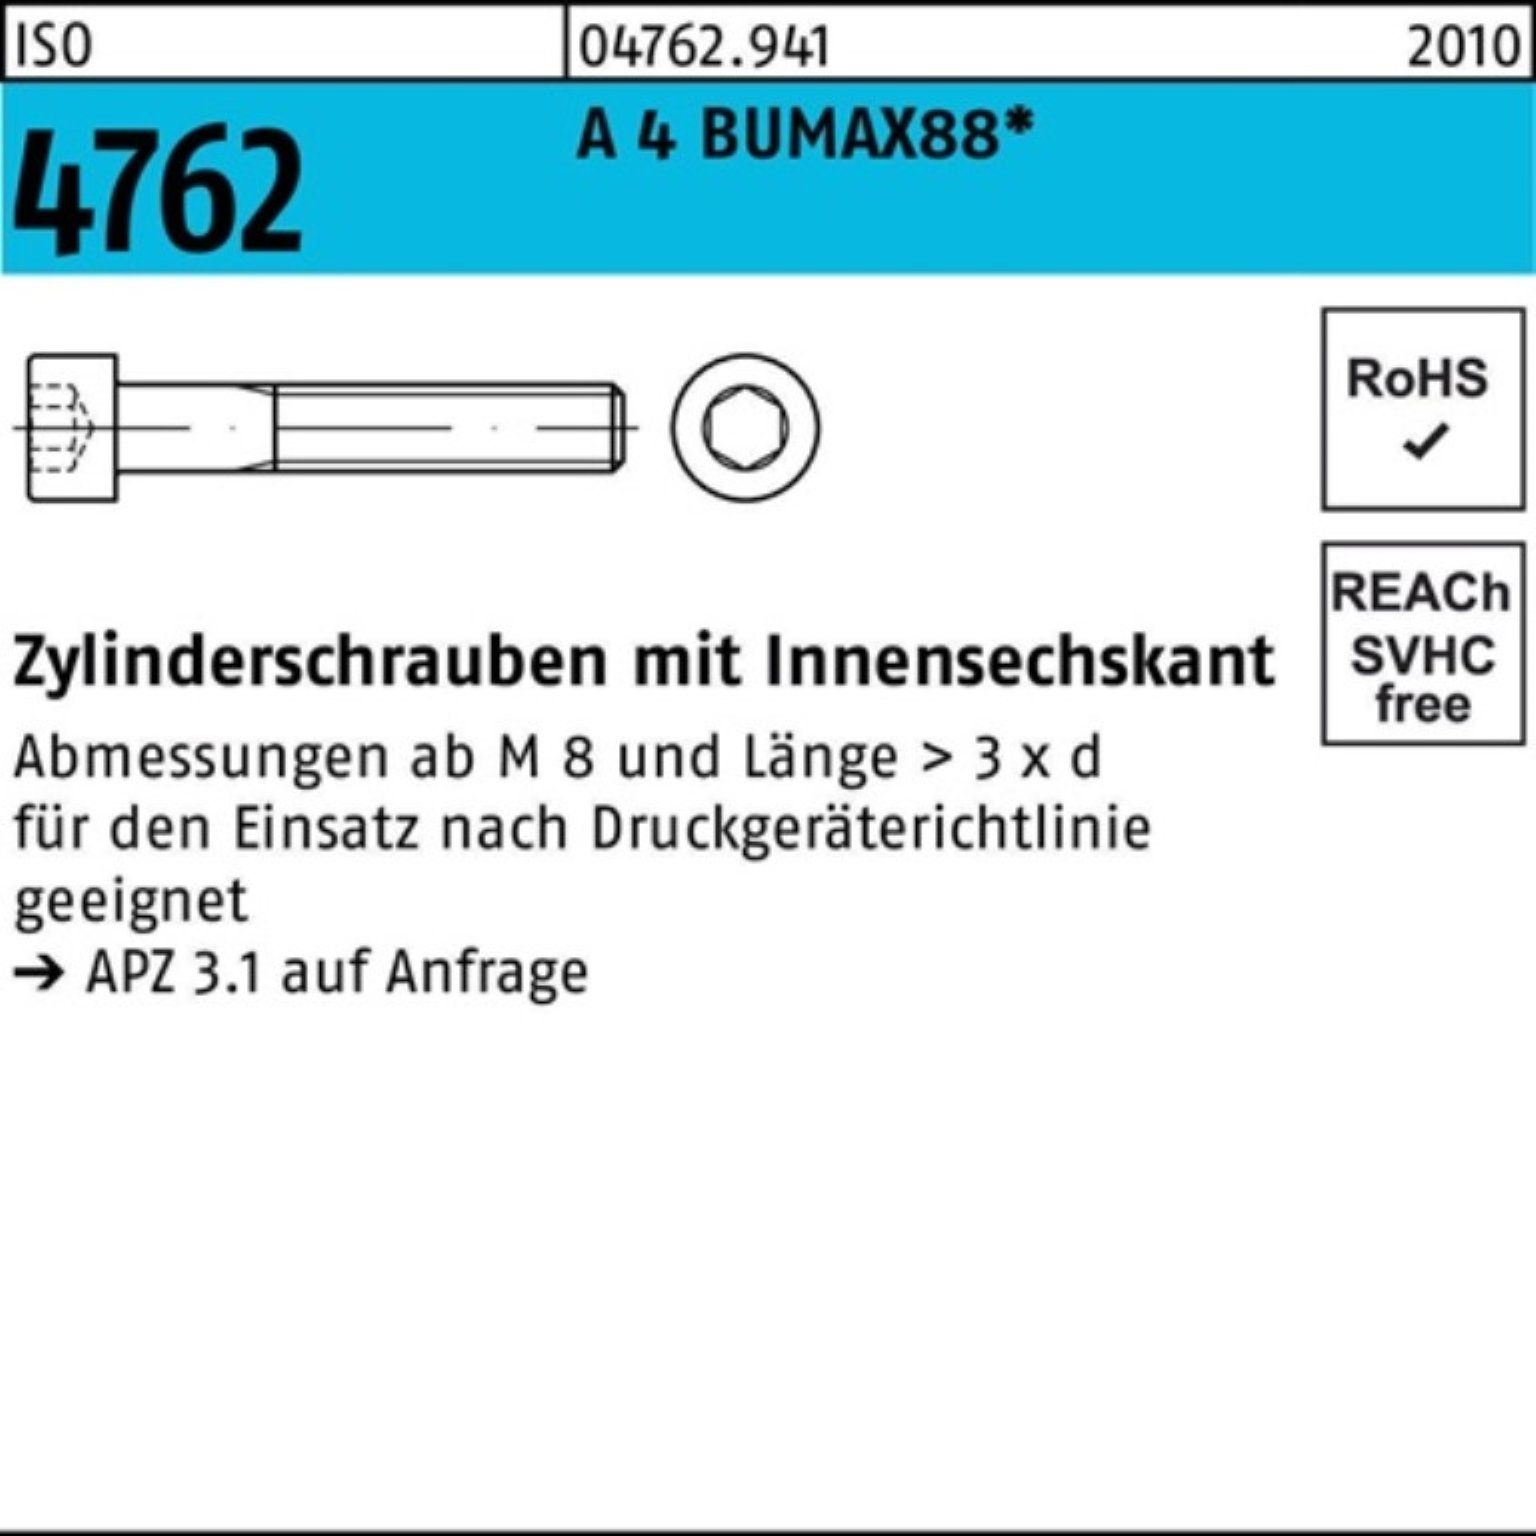 Zylinderschraube Innen-6kt 100 A 100er Zylinderschraube Bufab 4 M6x 4762 BUMAX88 ISO 20 Pack